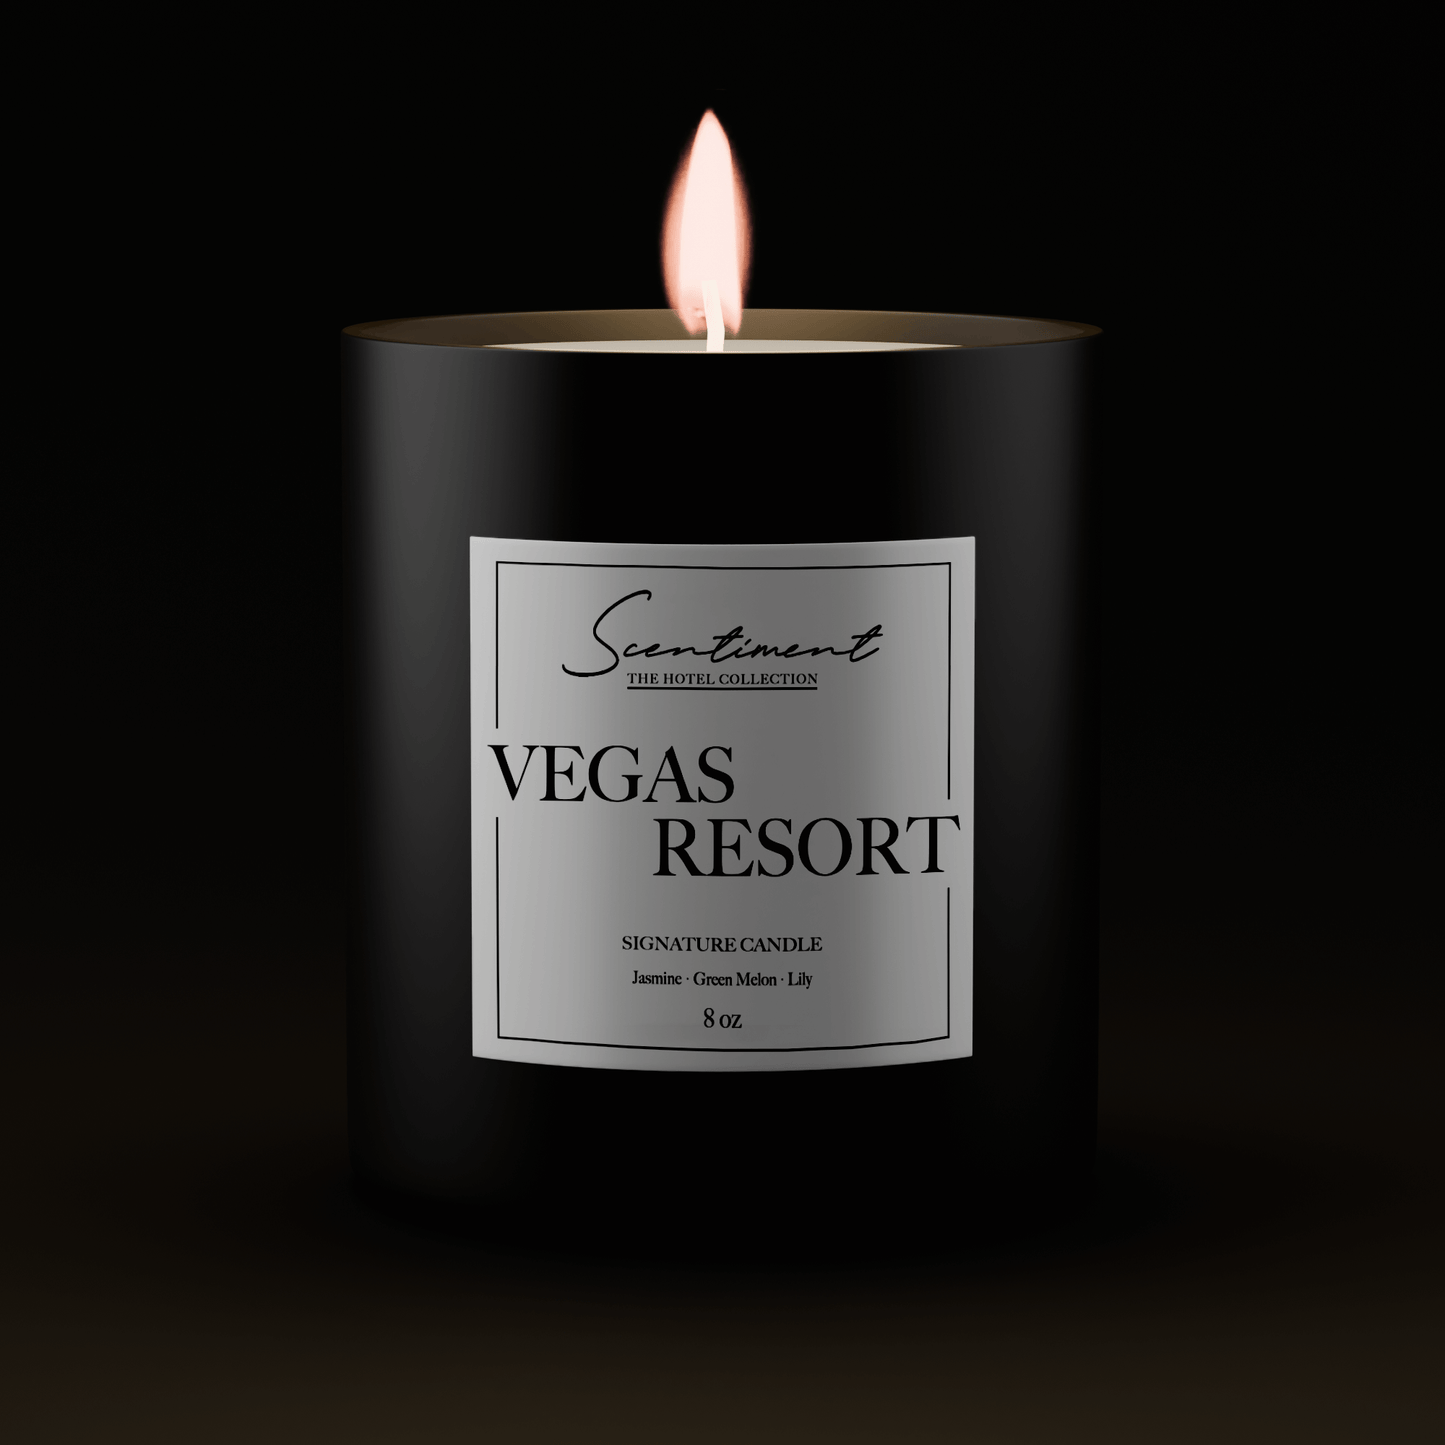 Inspired by the Wynn® Las Vegas, Vegas Resort Candle 8oz